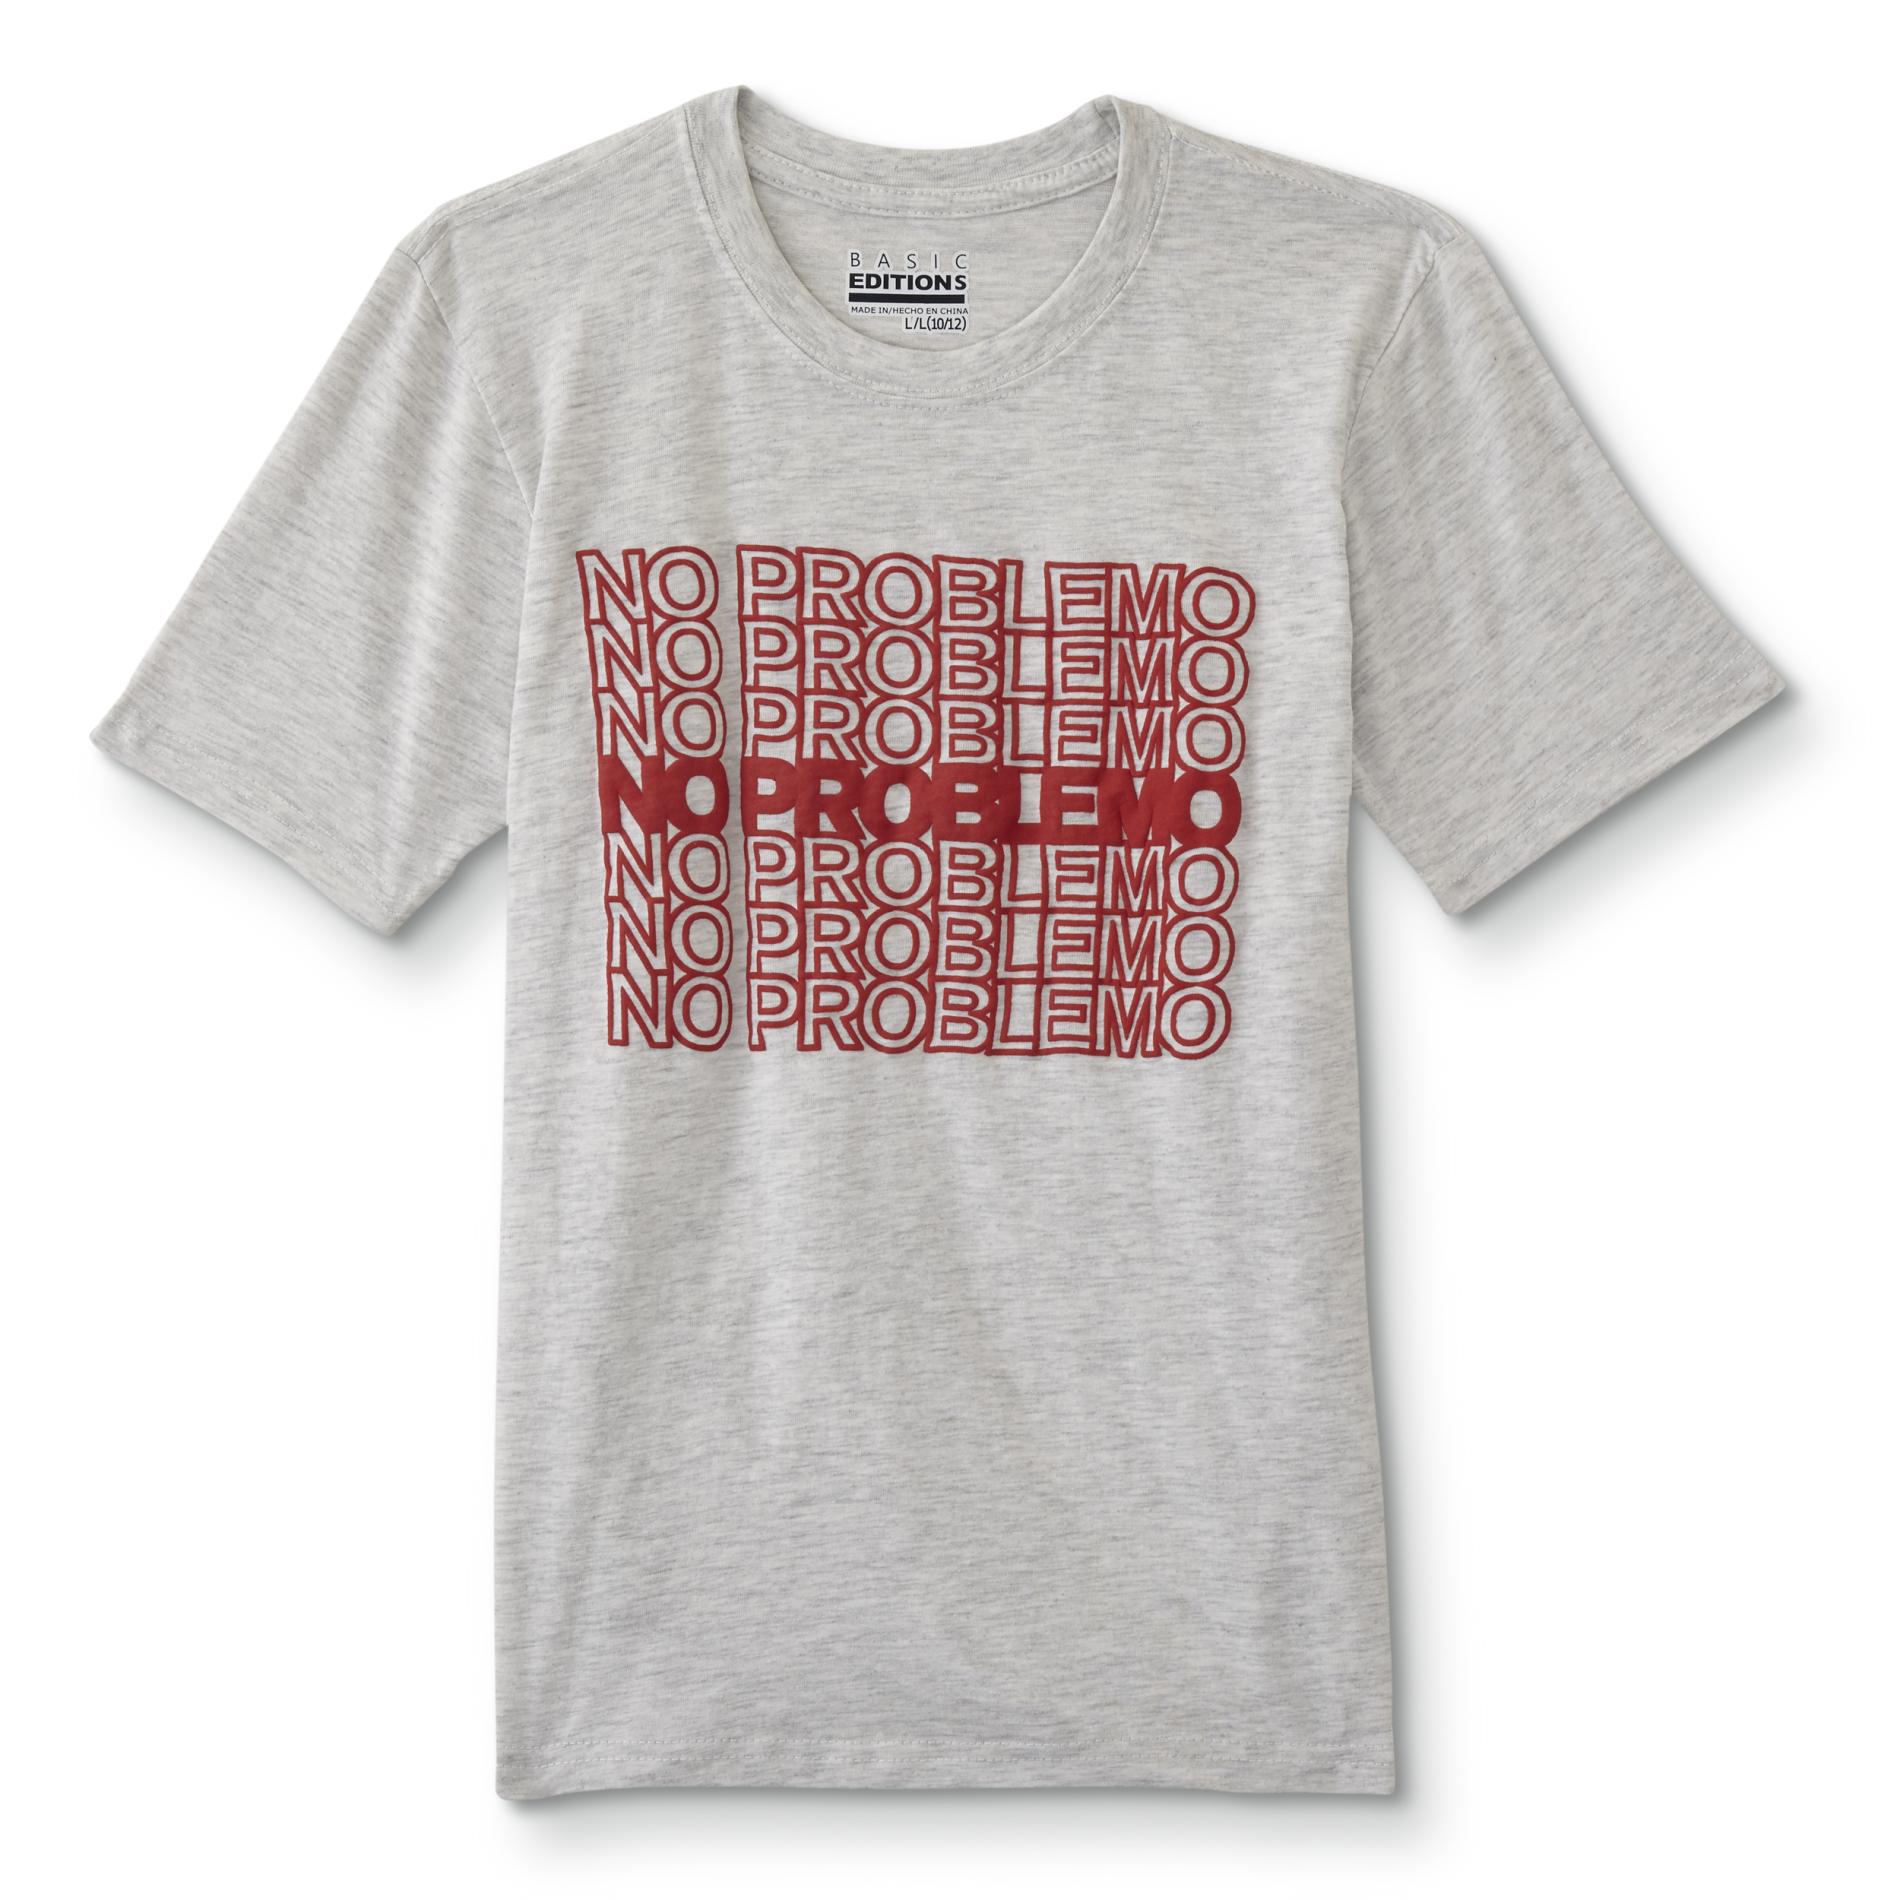 Montage Boys' Graphic T-Shirt - No Problemo